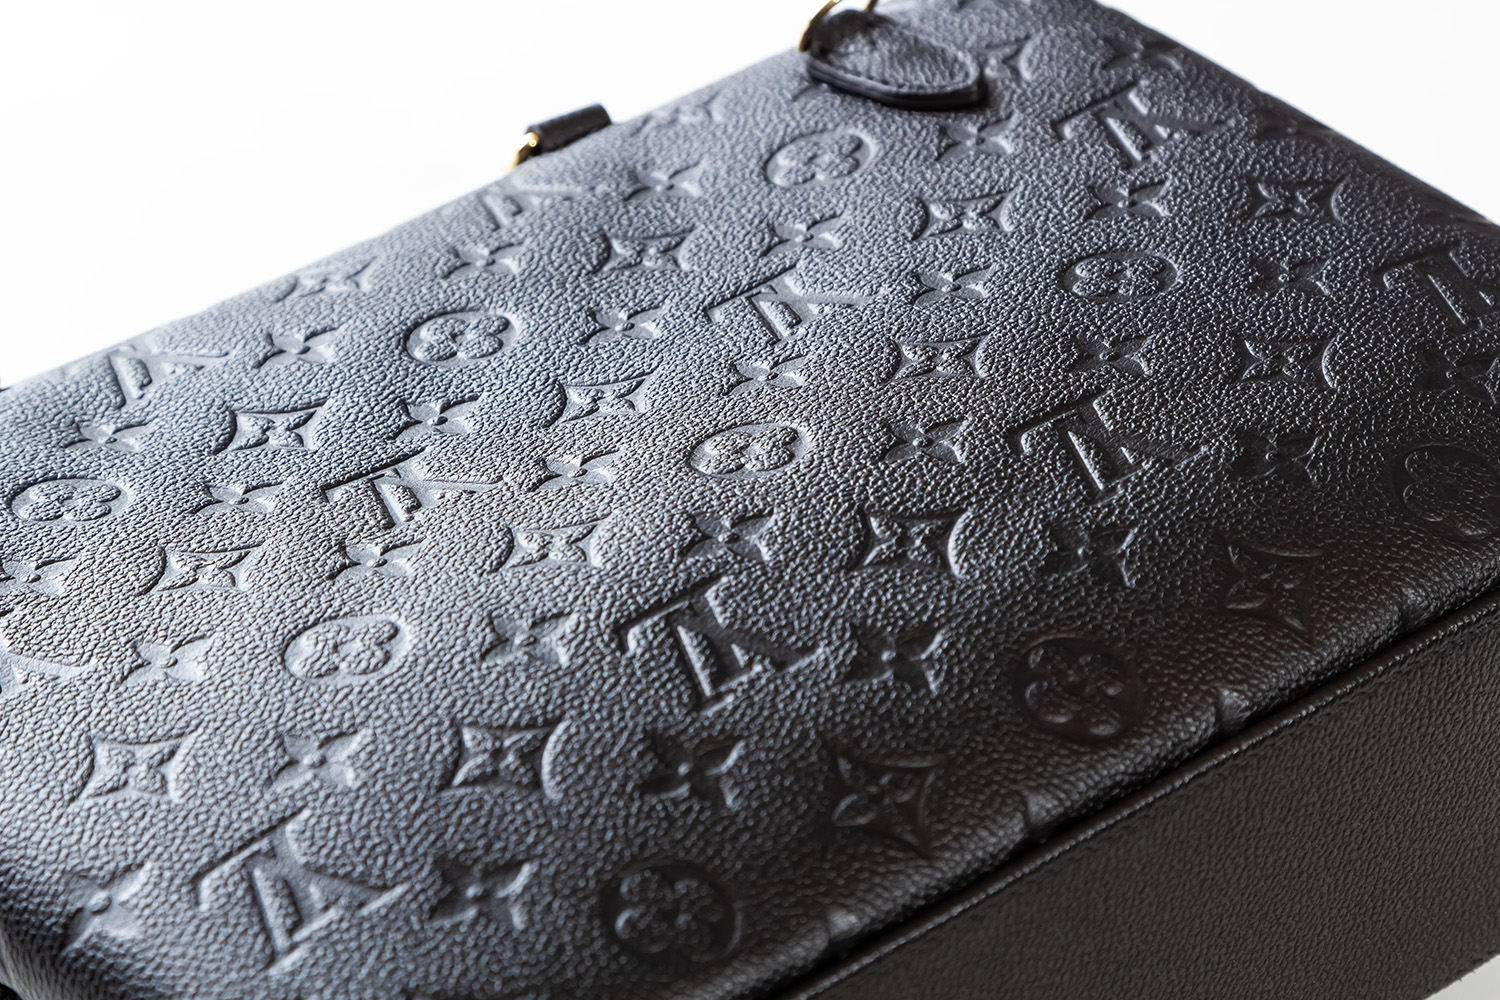 Marignan leather handbag Louis Vuitton Multicolour in Leather - 23734479